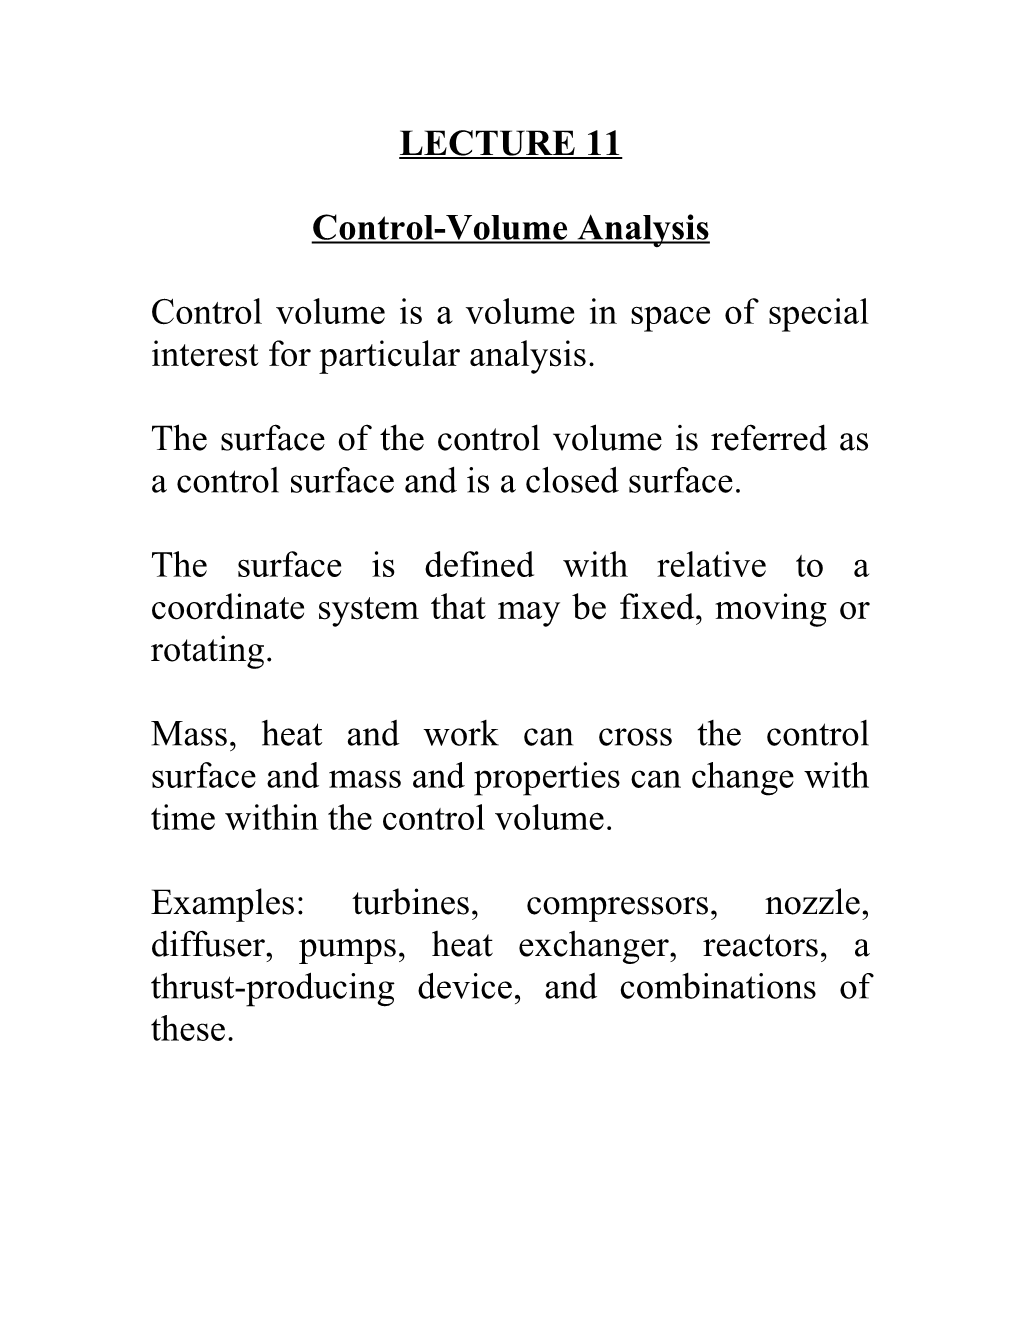 Control-Volume Analysis